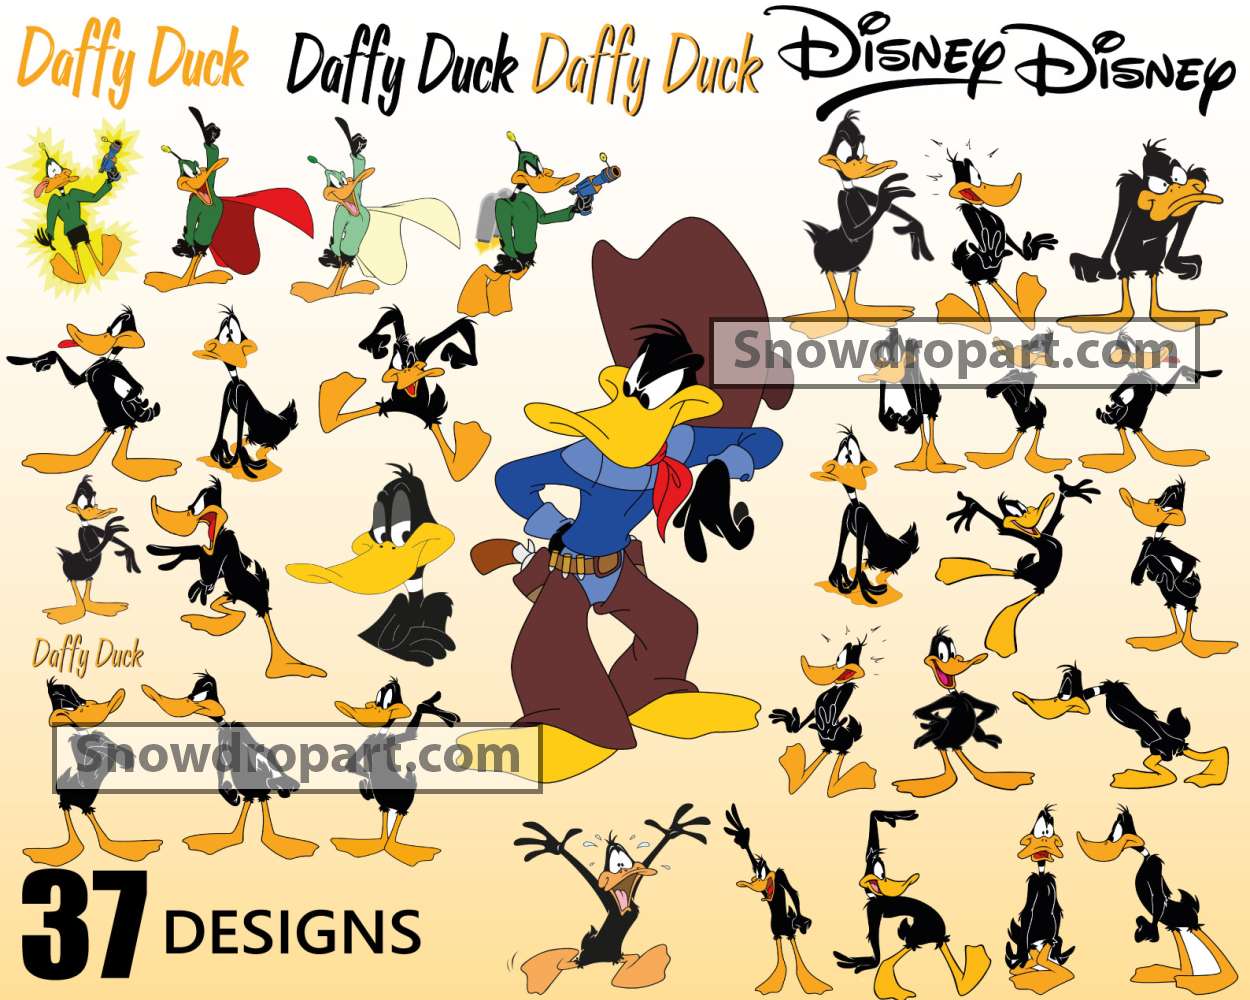 evolution of daffy duck